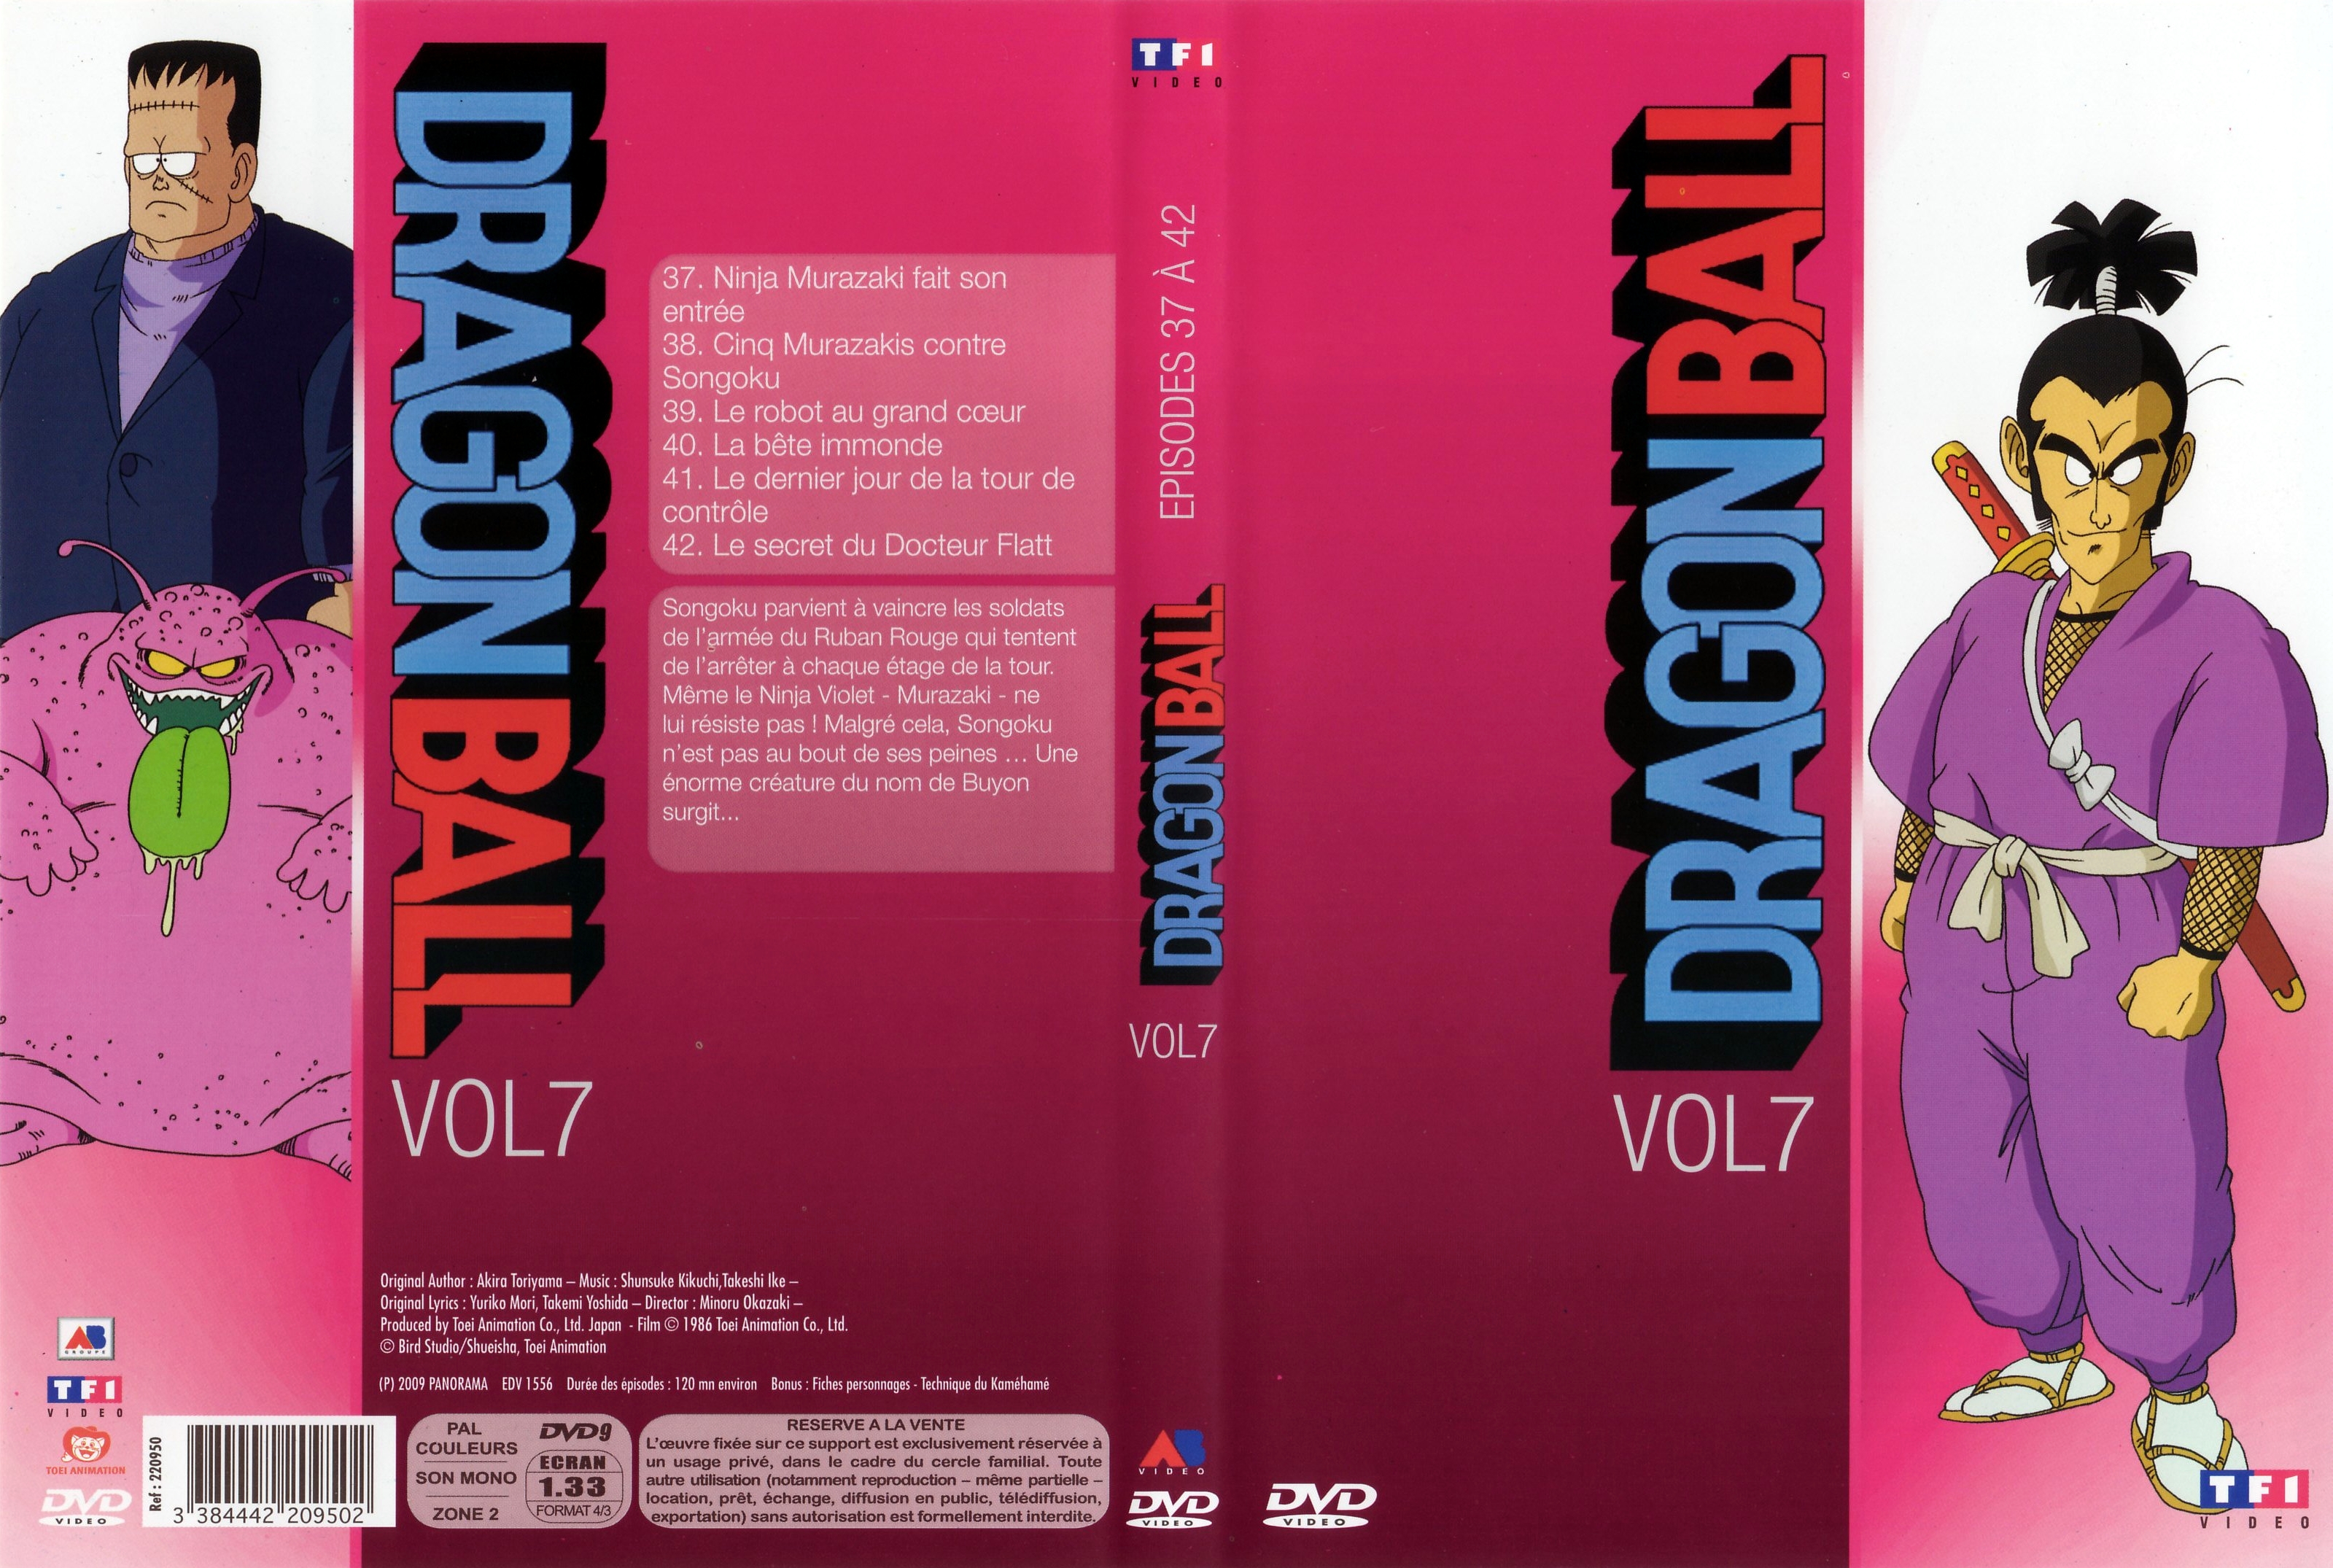 Jaquette DVD Dragon ball vol 07 v2